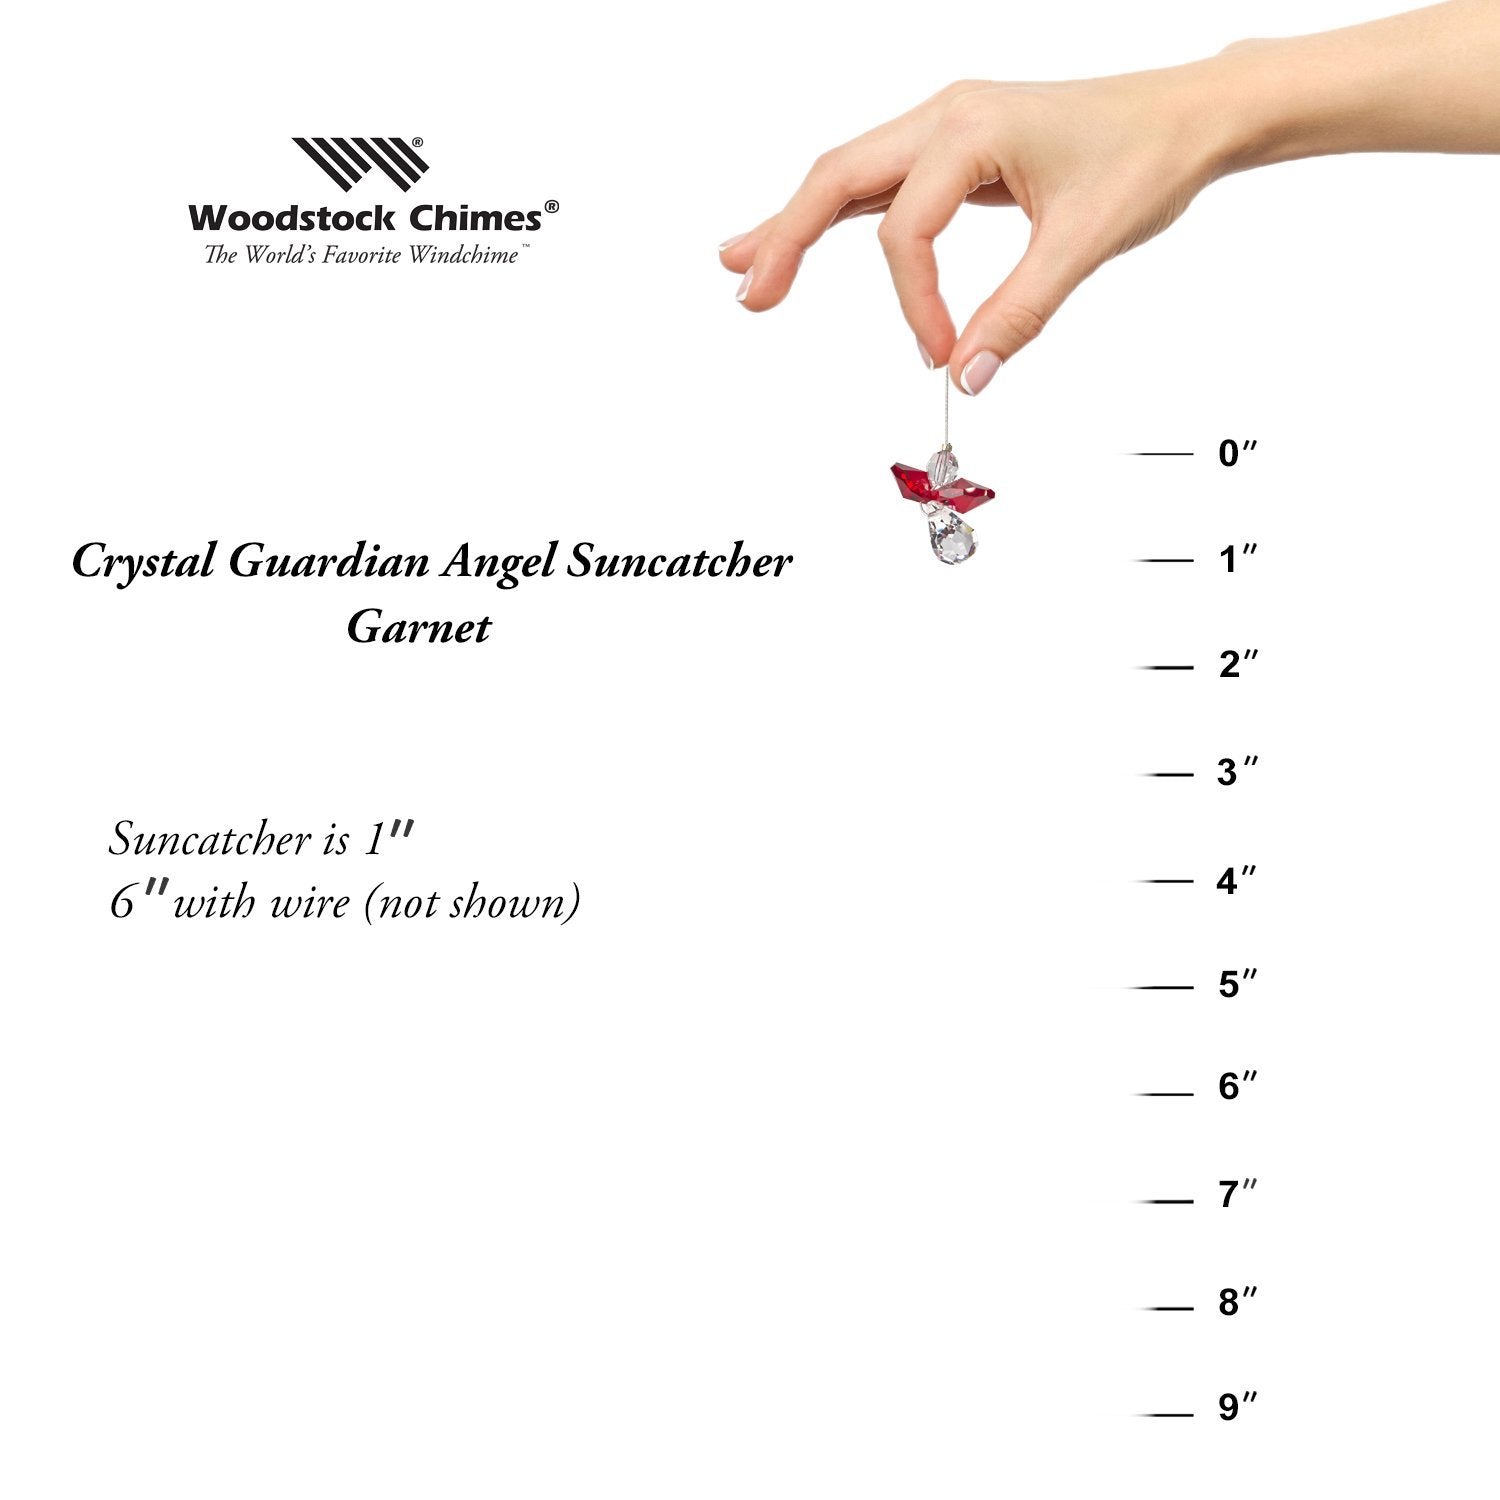 Crystal Guardian Angel Suncatcher - Garnet (January) proportion image